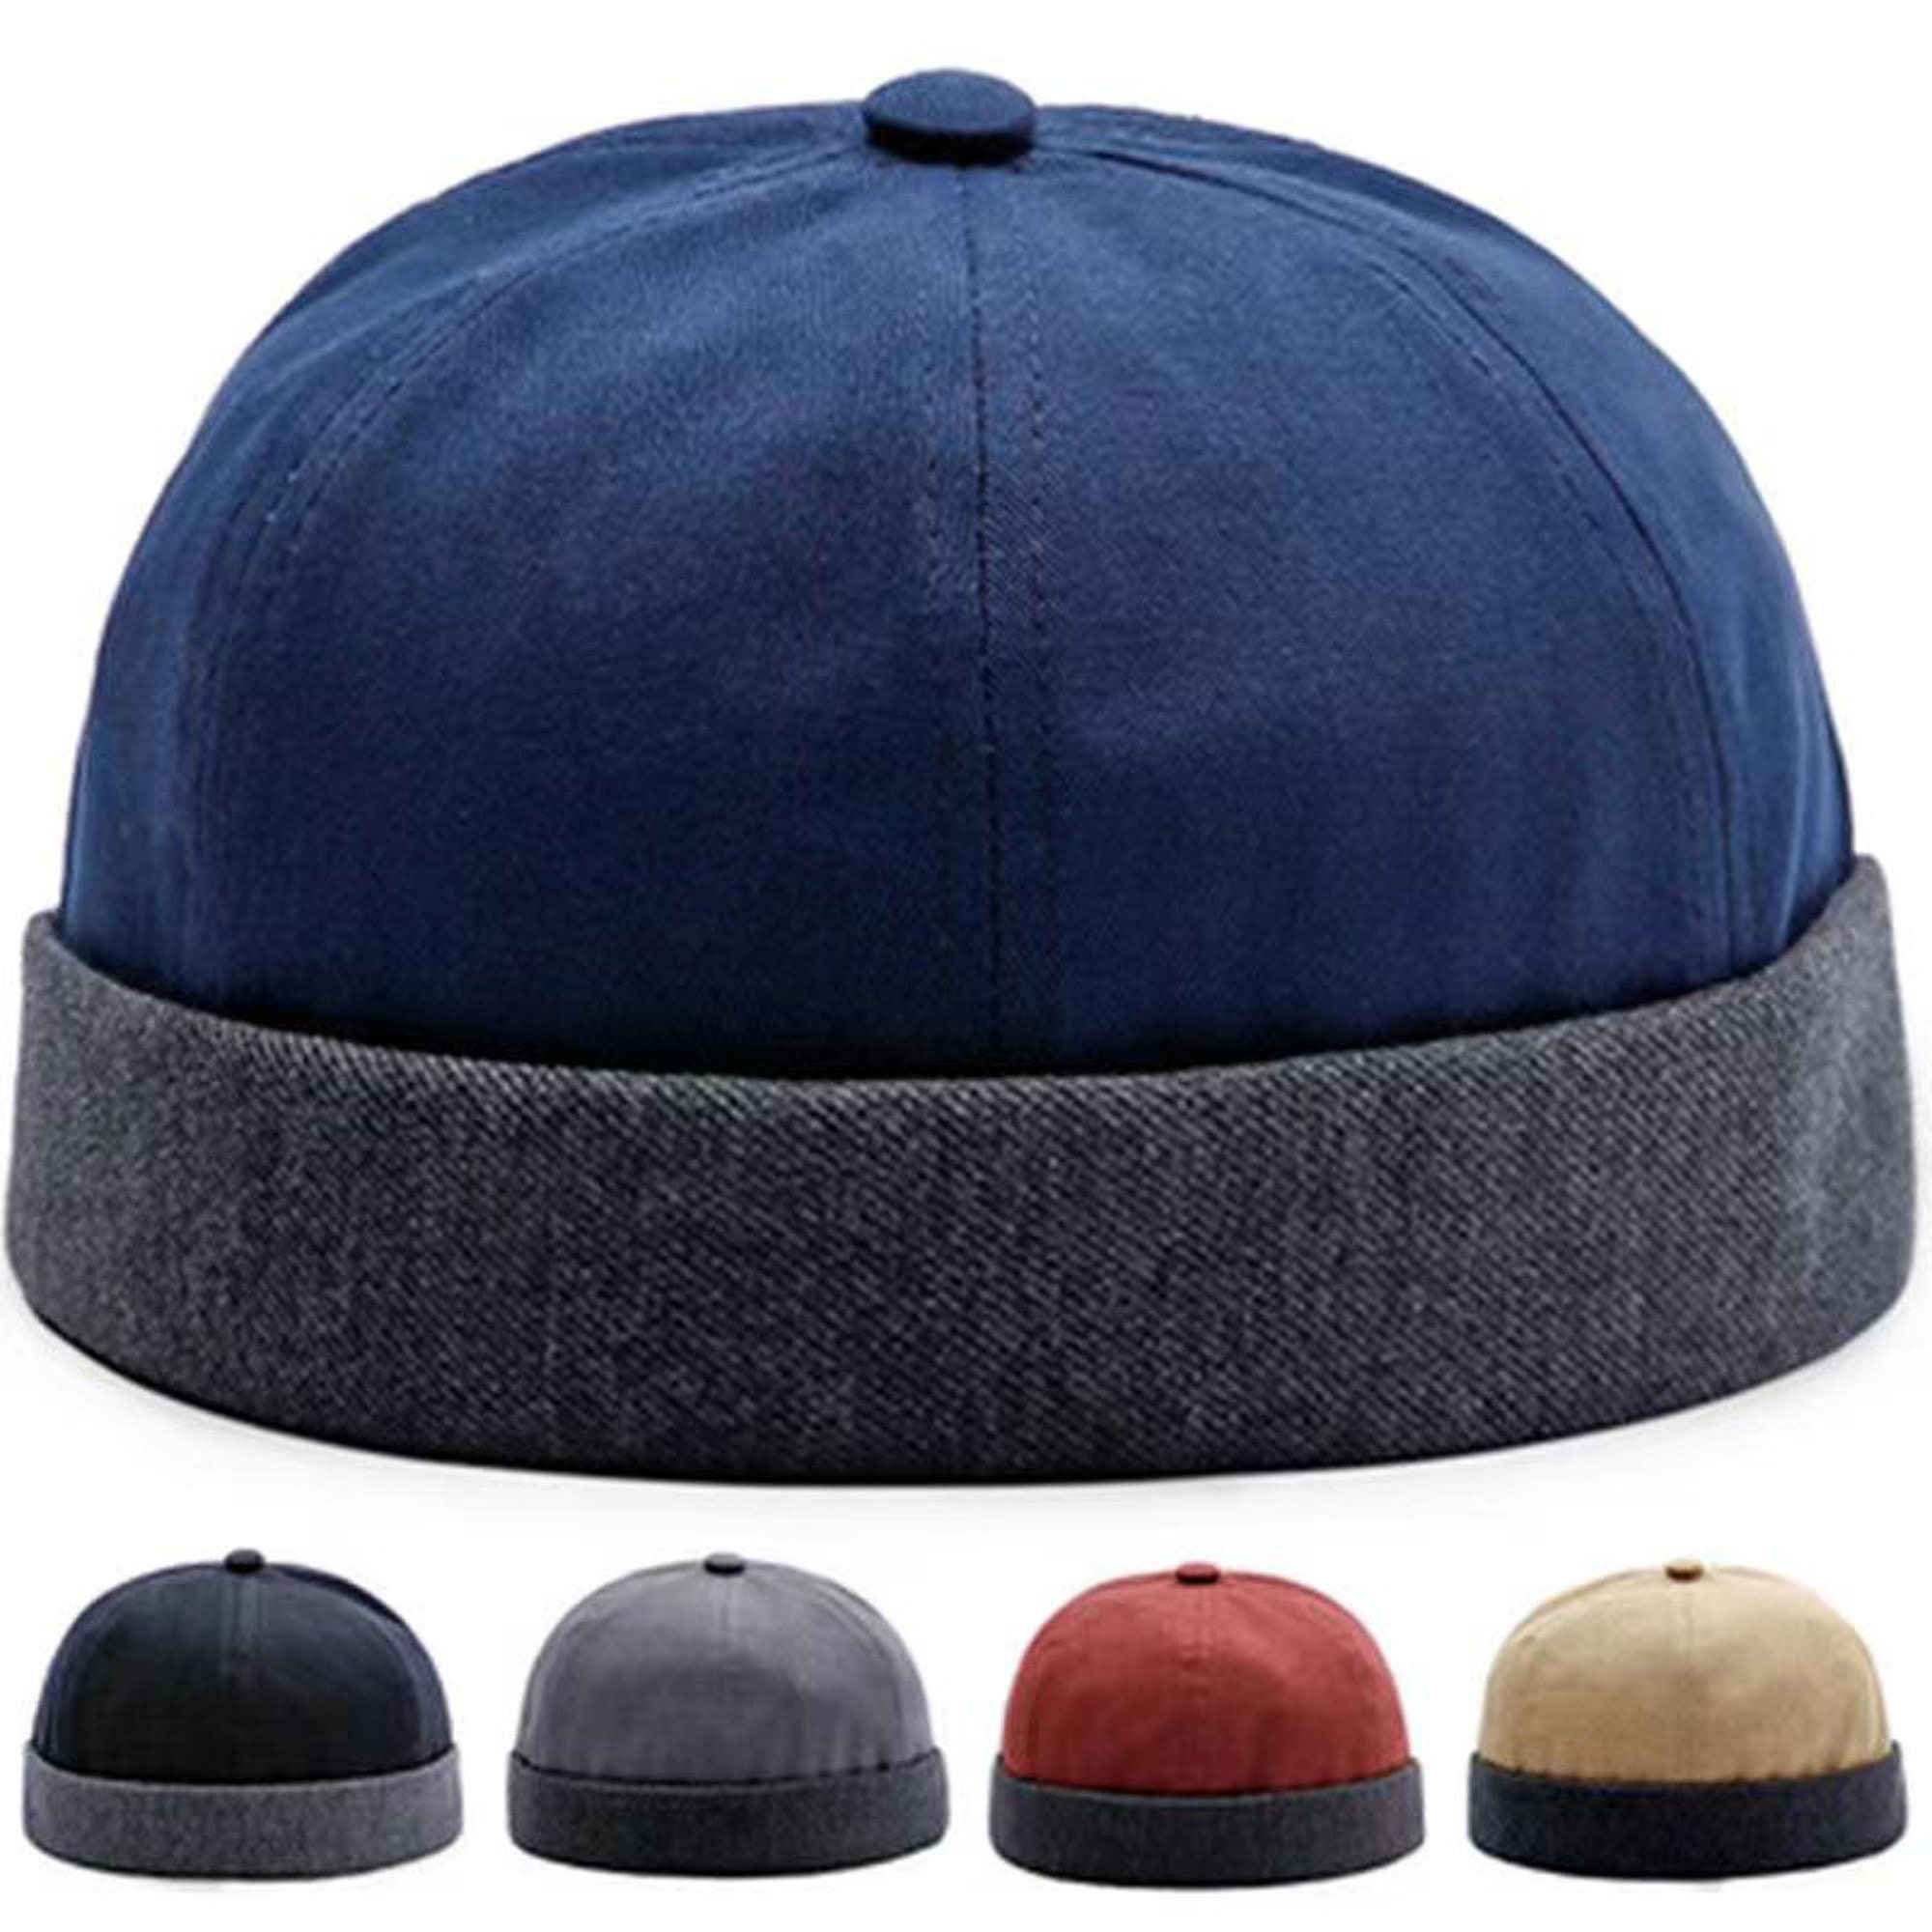 Vintage Docker Cap, Brimless Hat, Beanie Hats, Cotton Retro